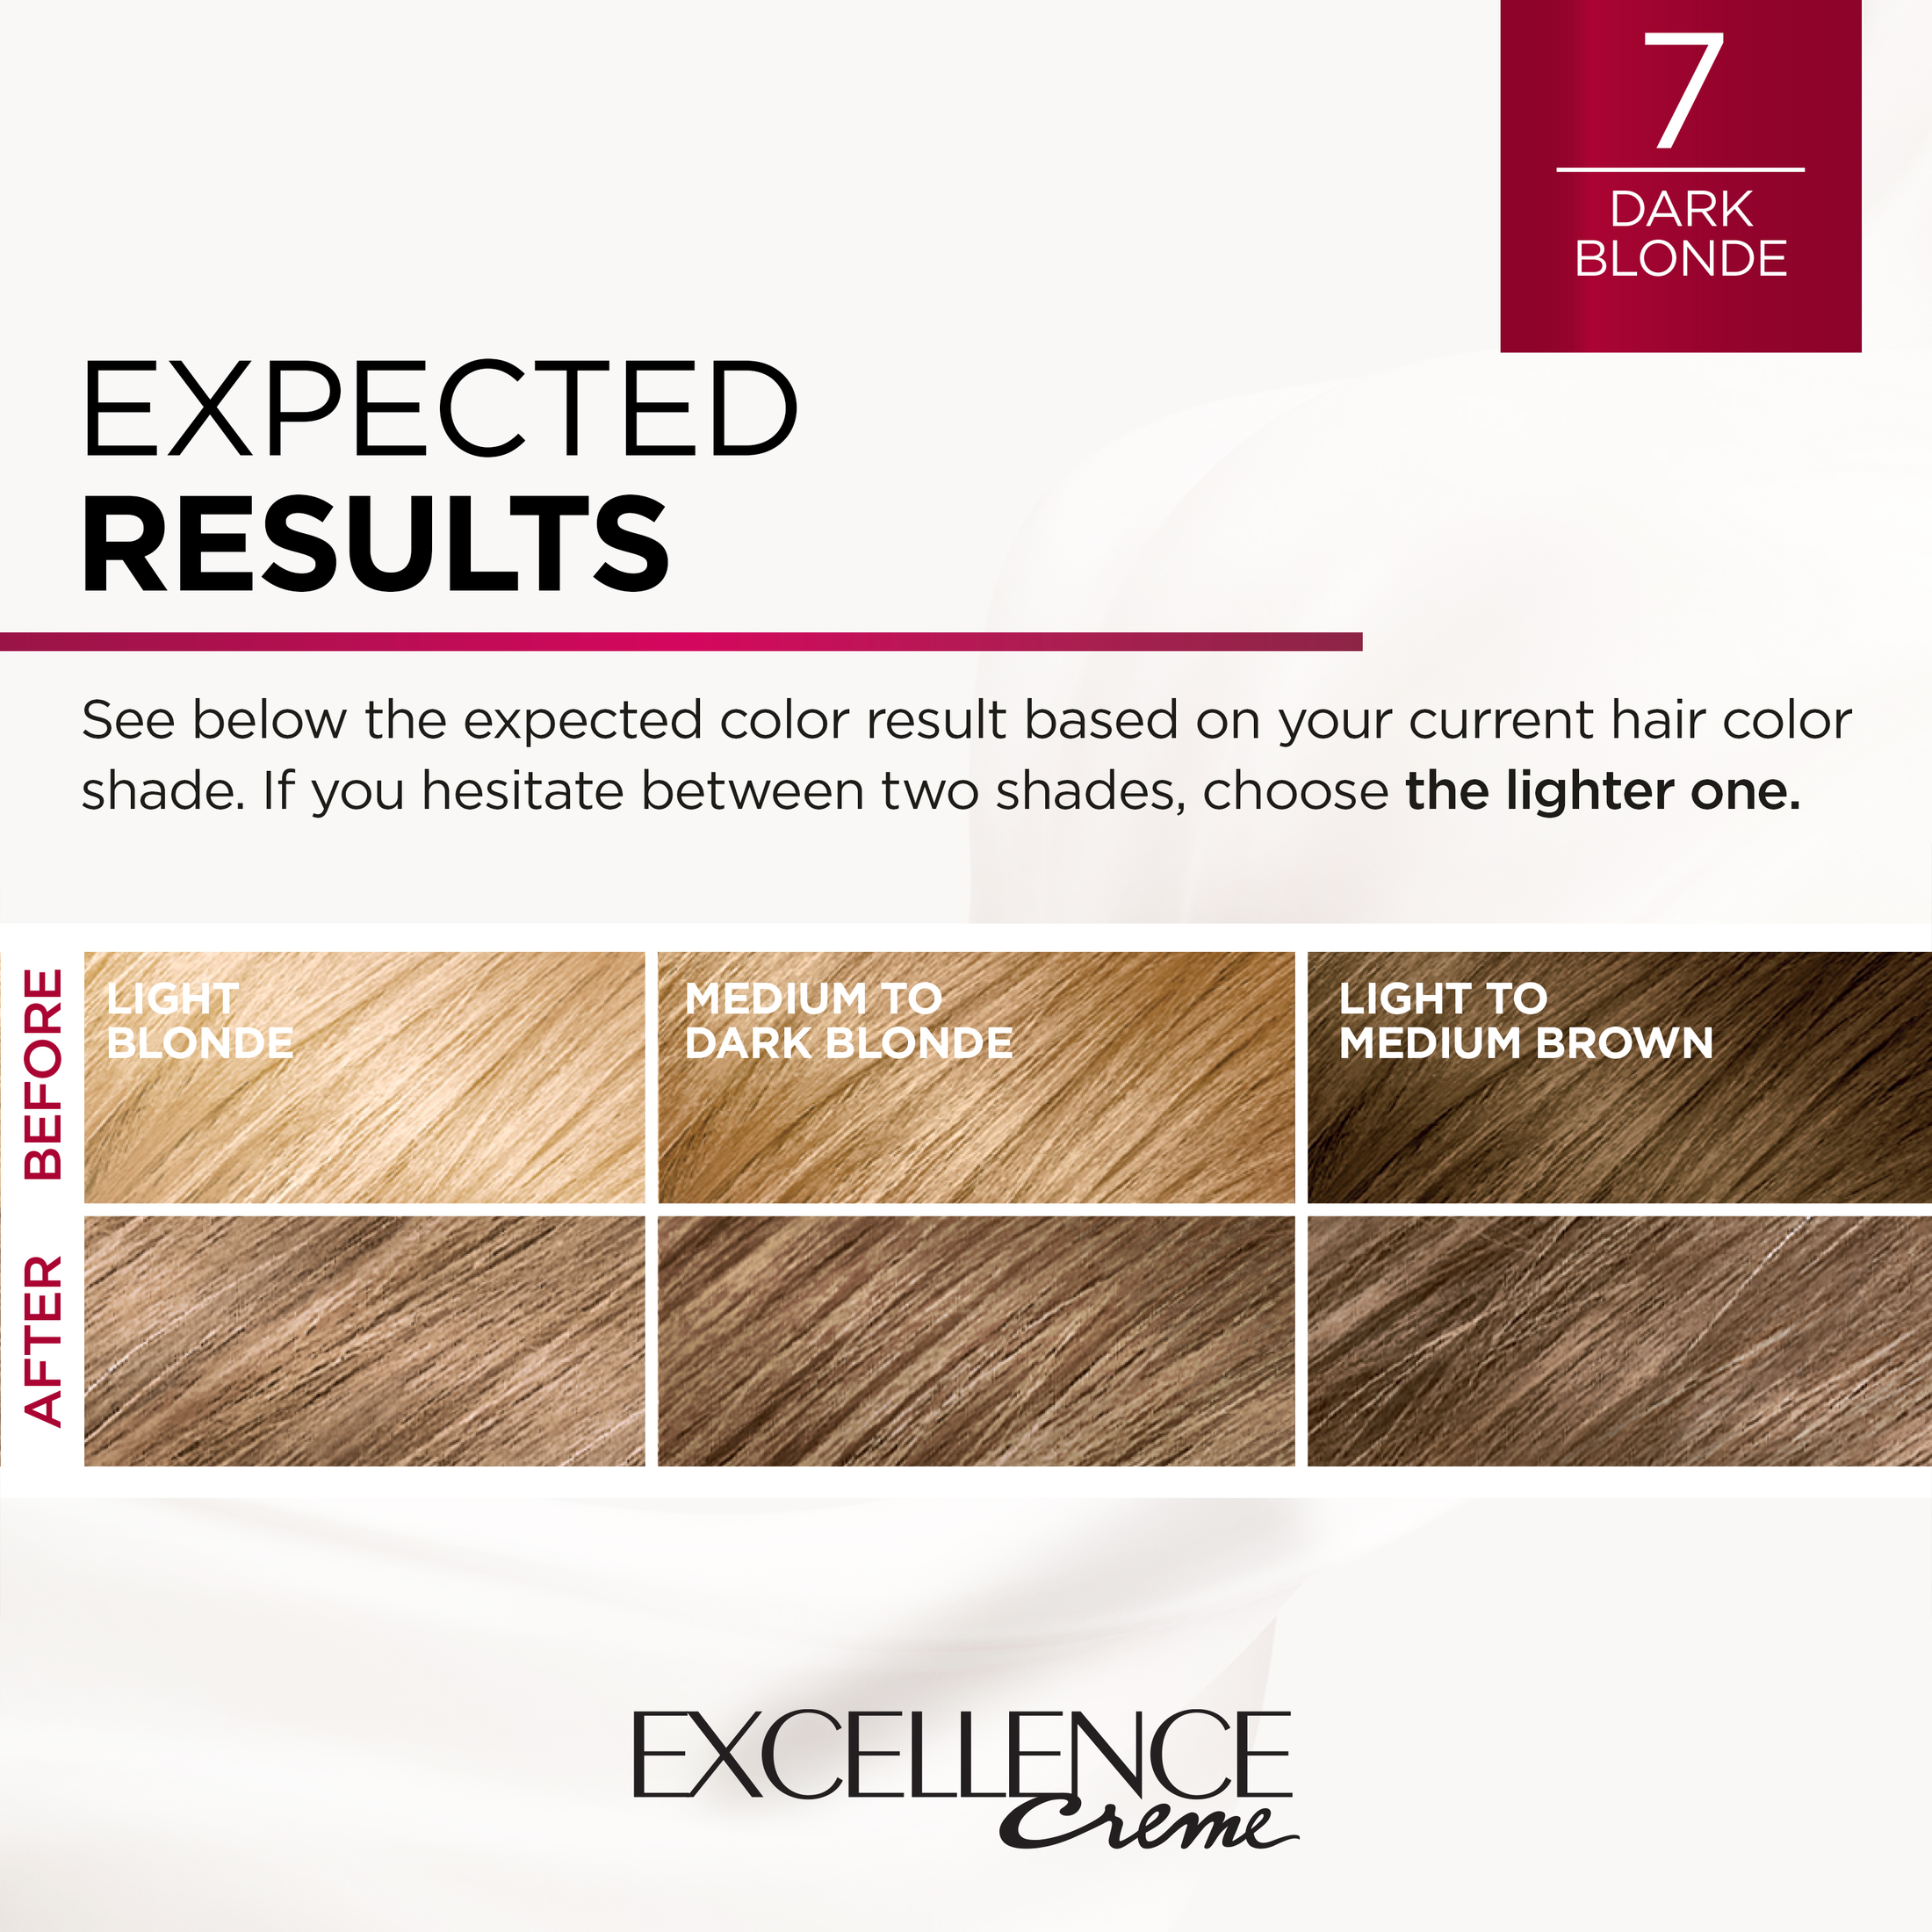 L'Oreal Paris Excellence Creme Permanent Hair Color, 7 Dark Blonde - image 5 of 8